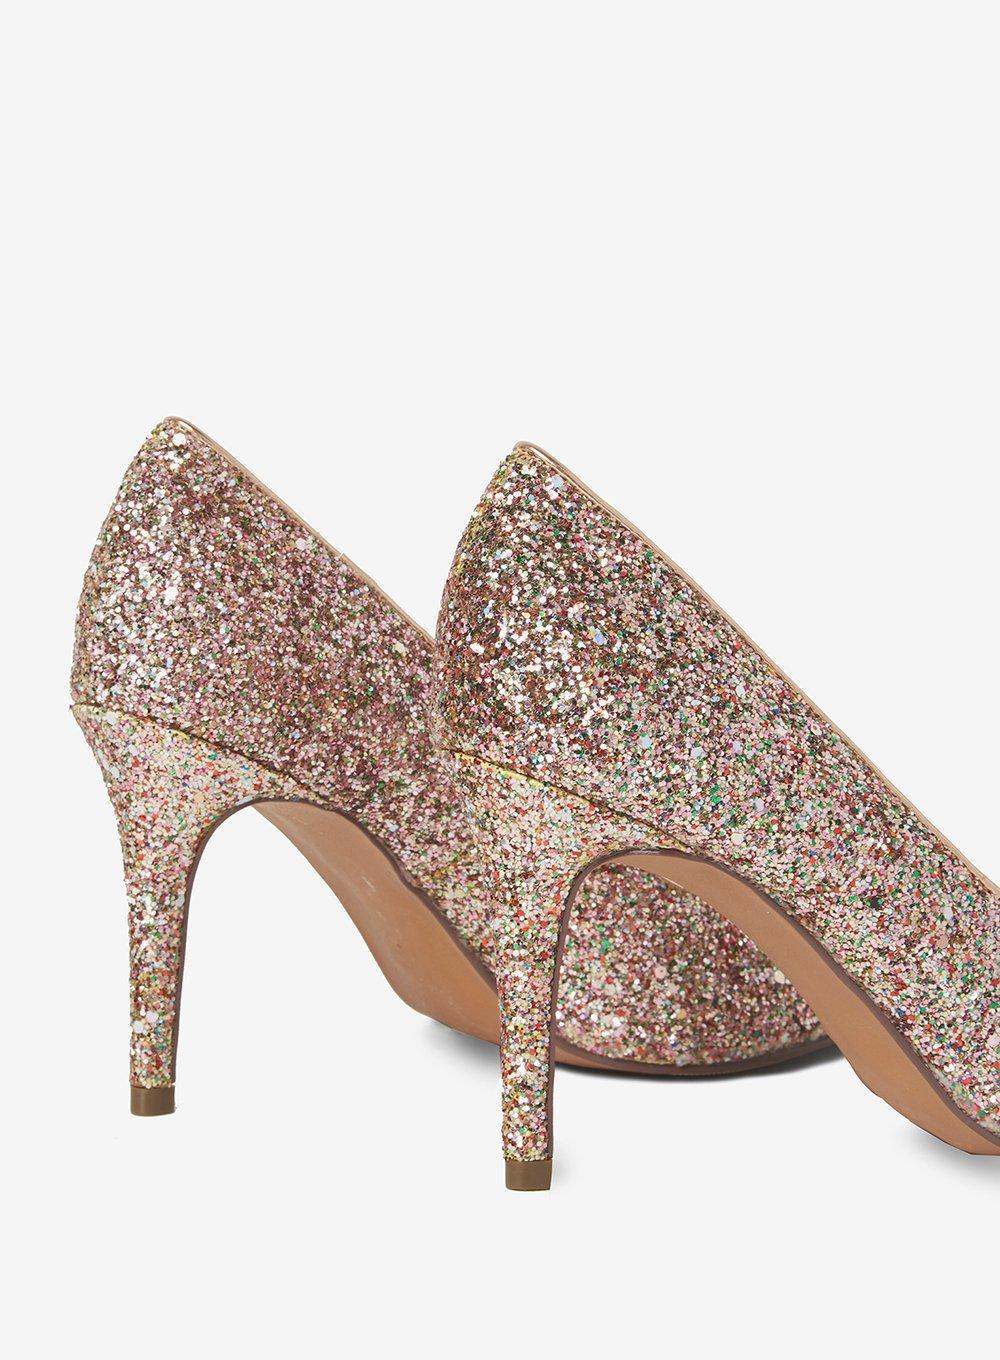 dorothy perkins glitter shoes